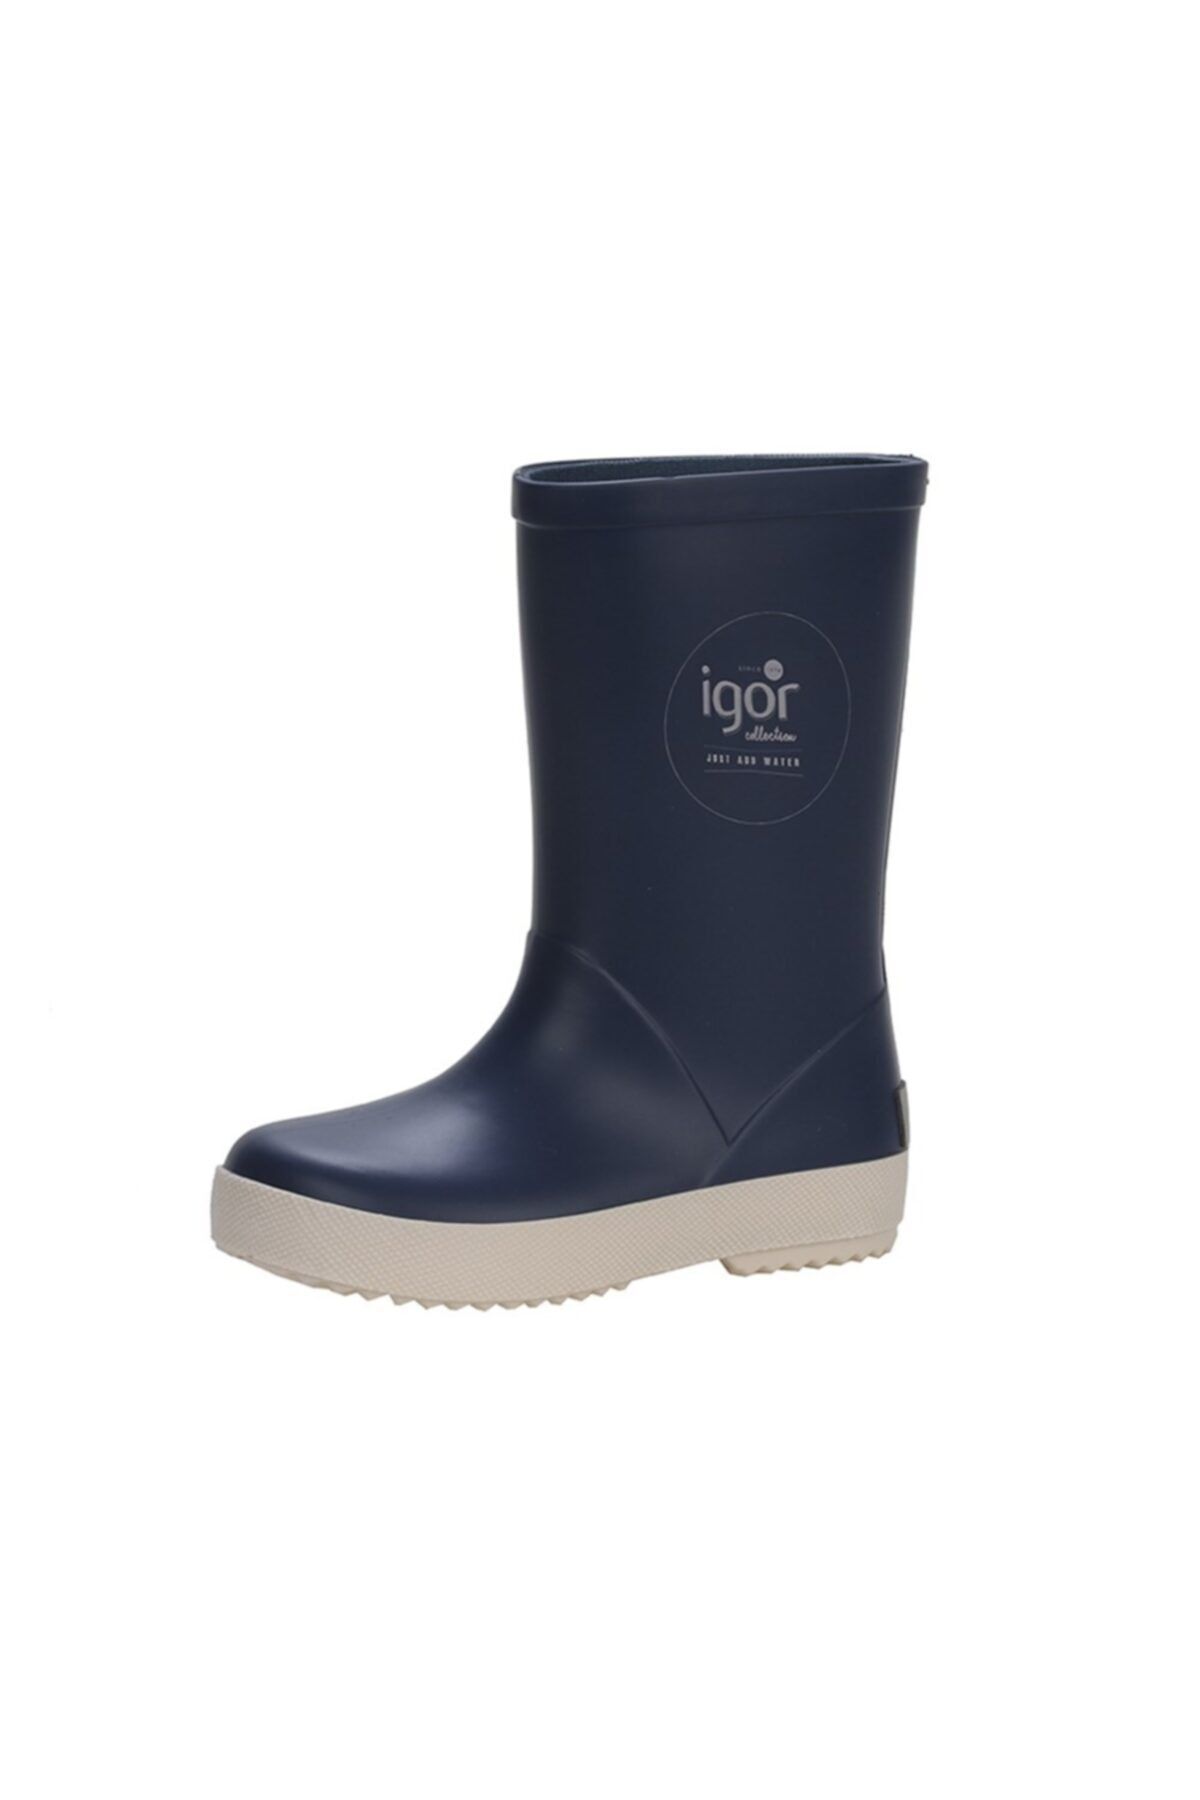 IGOR Yağmur Çizmesi Splash Nautico W10107 Laci 22-30